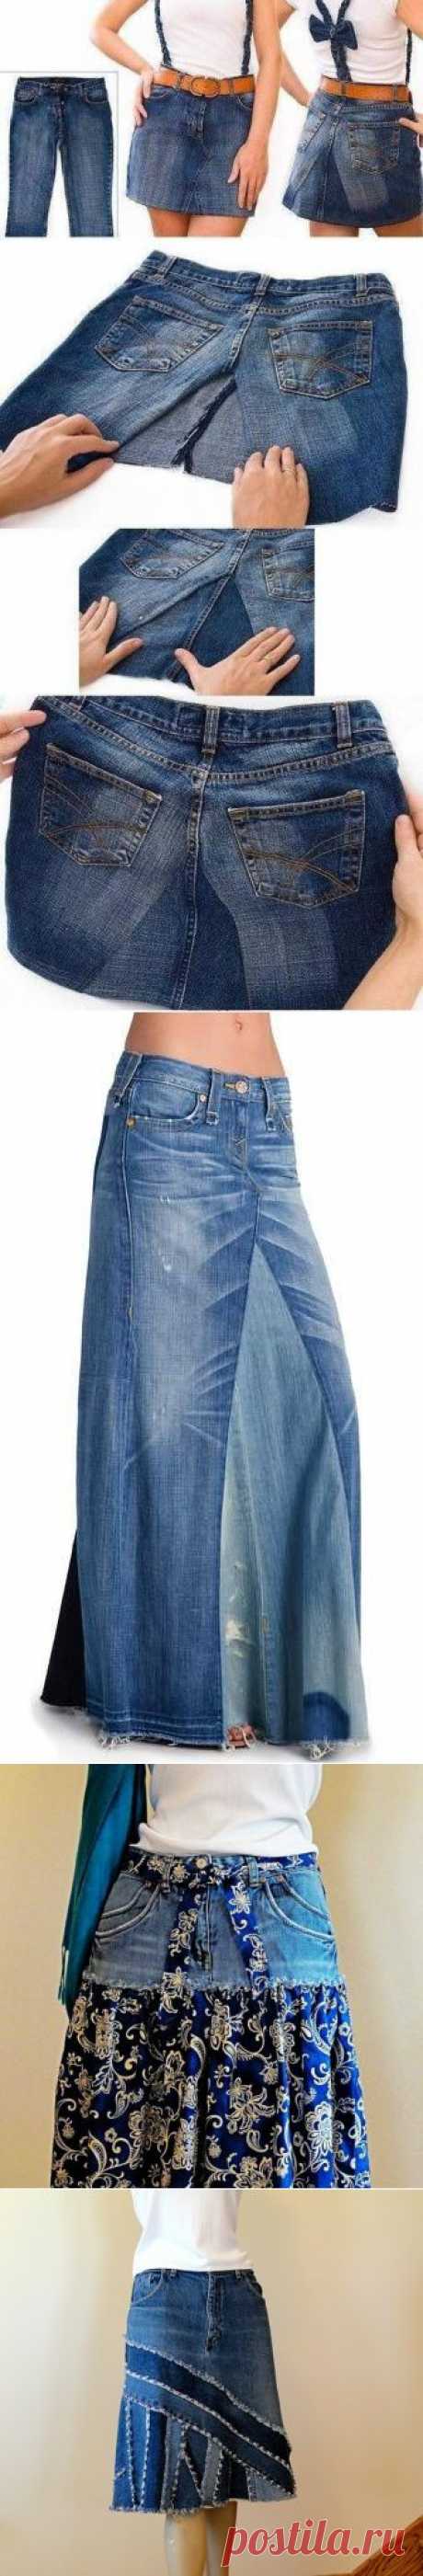 Юбка из старых джинс: 5 масетер-классов + идеиБлог о рукоделии и моде | Блог о рукоделии и моде